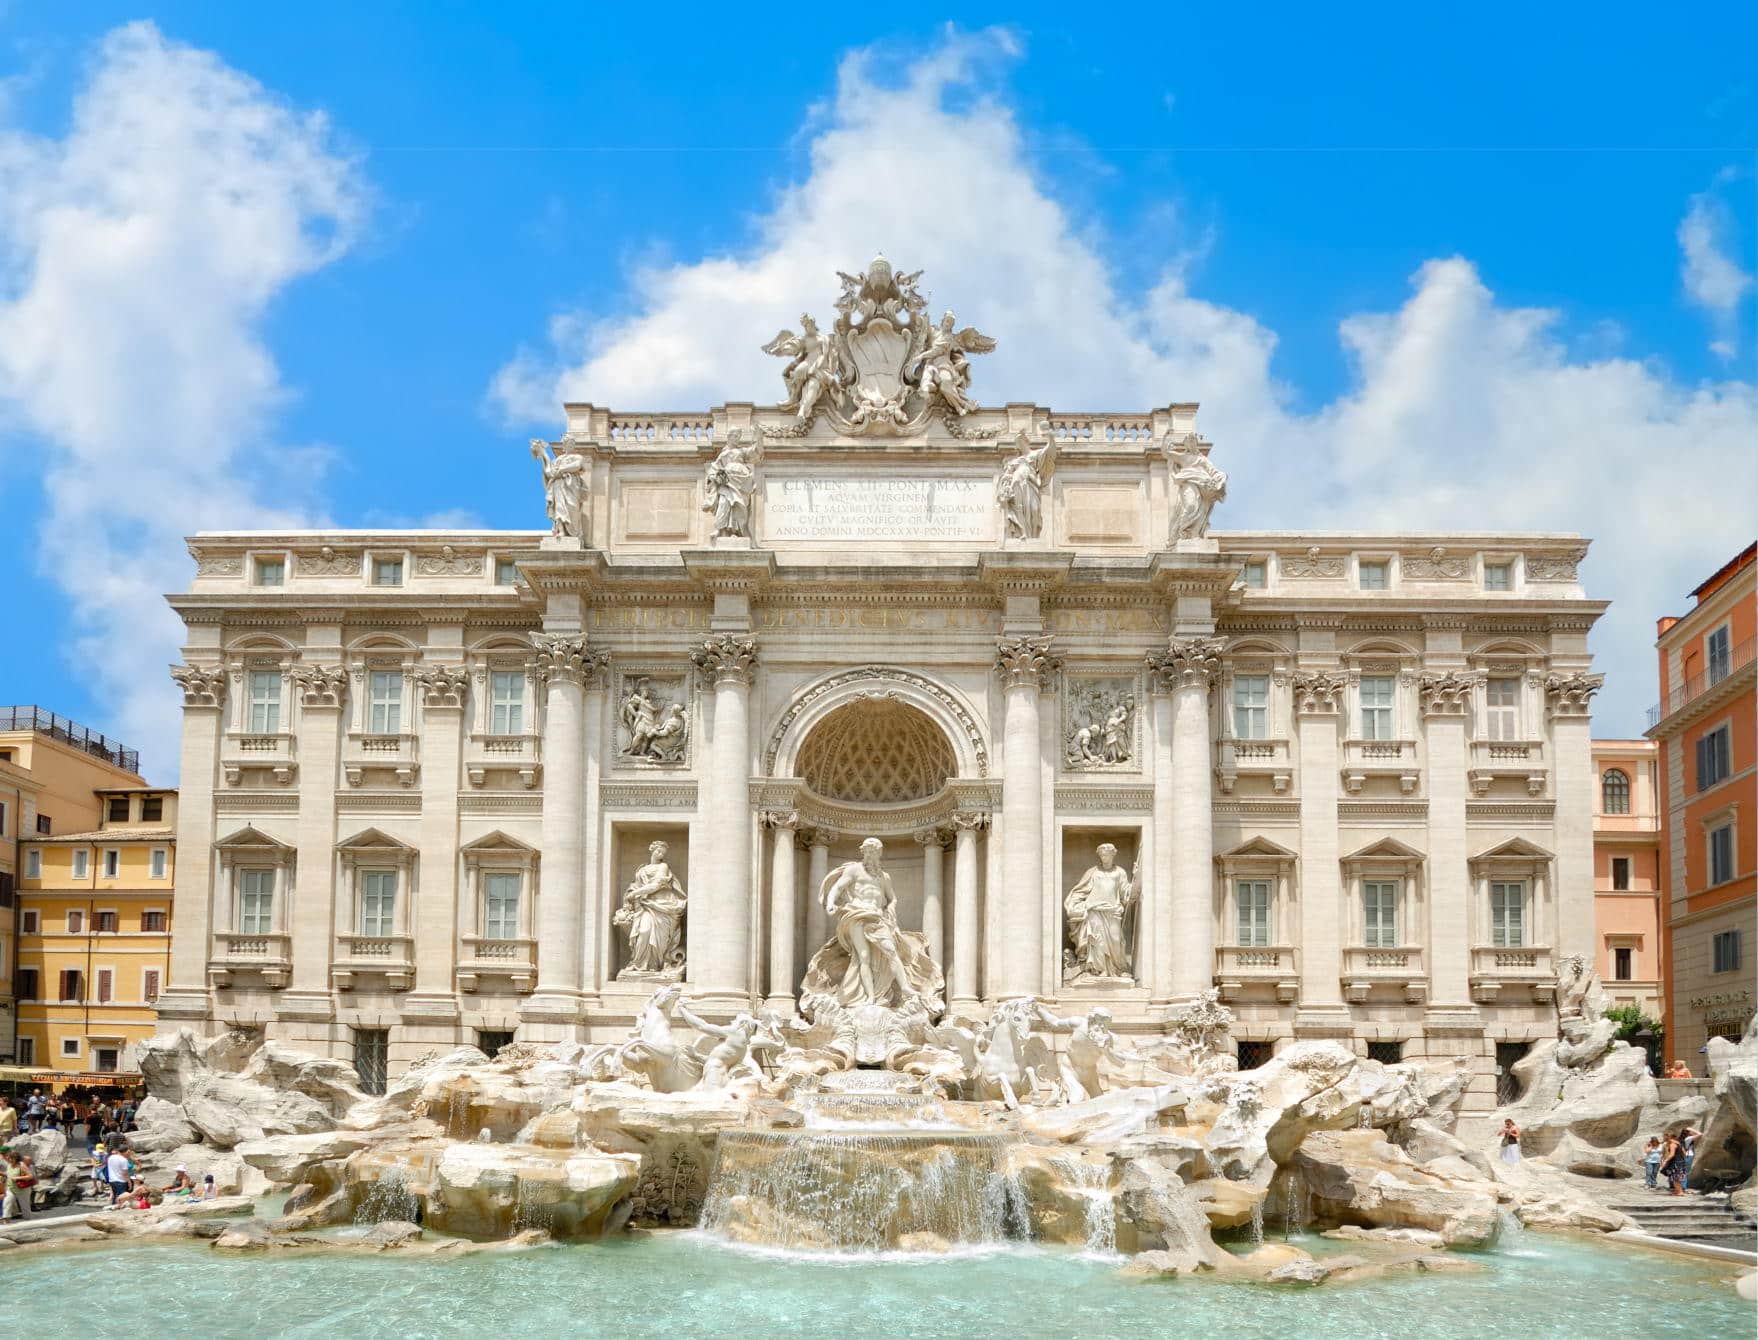 The Trevi fountain, a popular touristic landmark